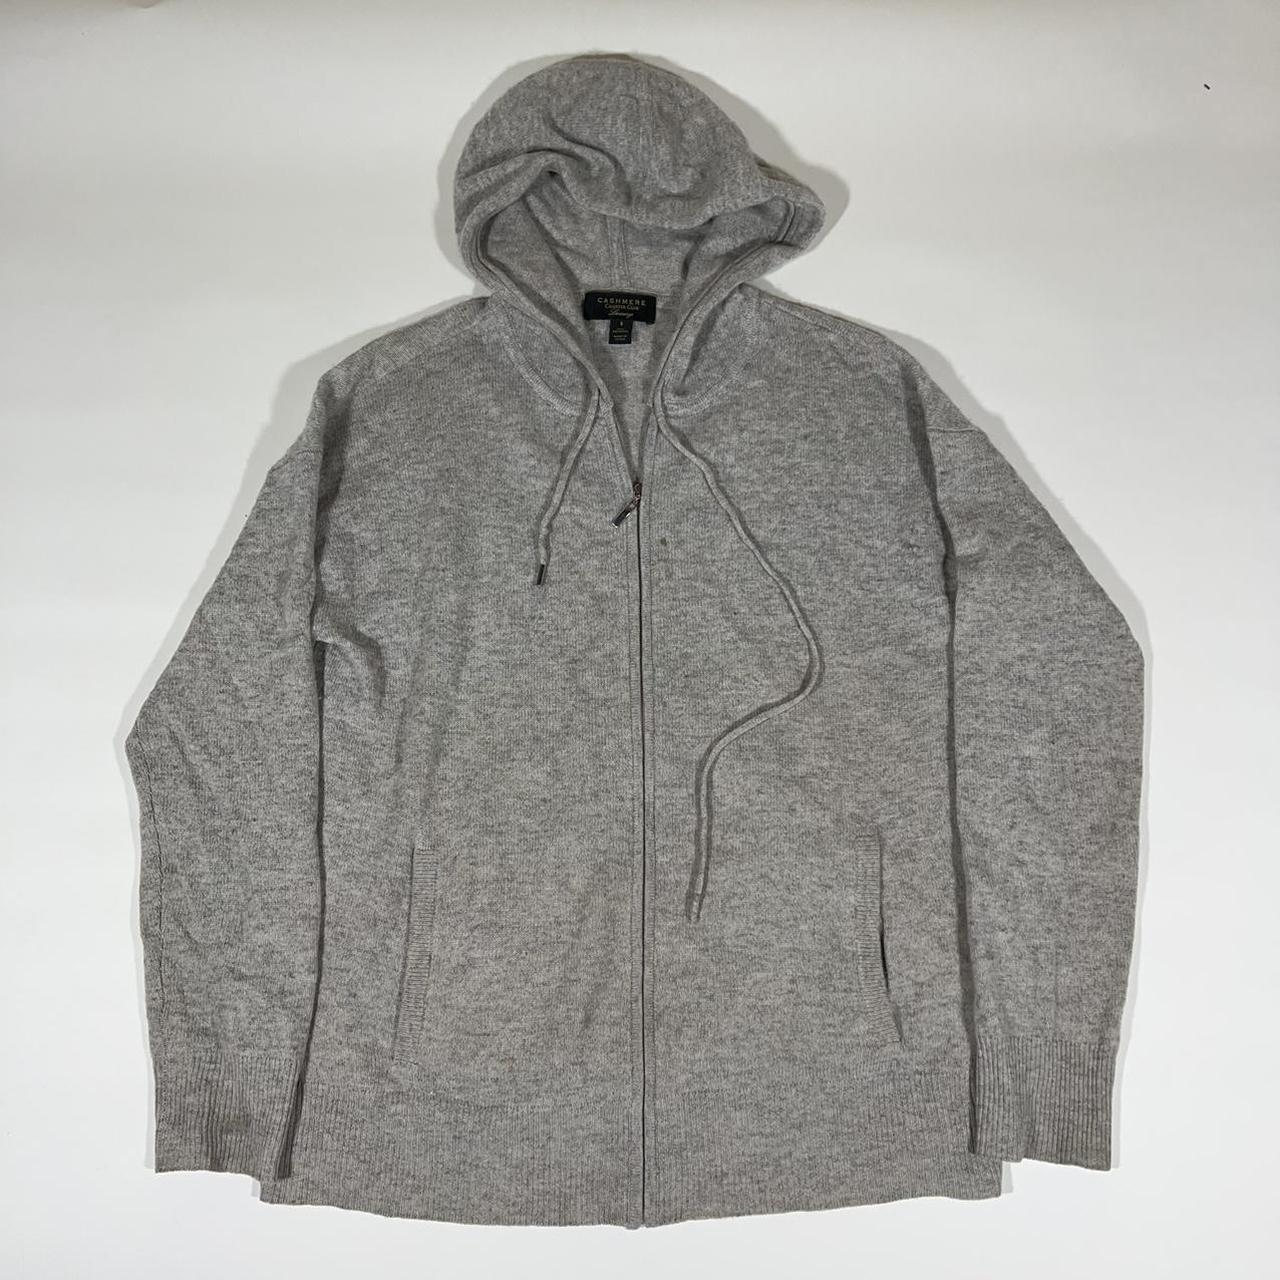 Product Image 1 - Vintage 90s grey cashmere jacket.